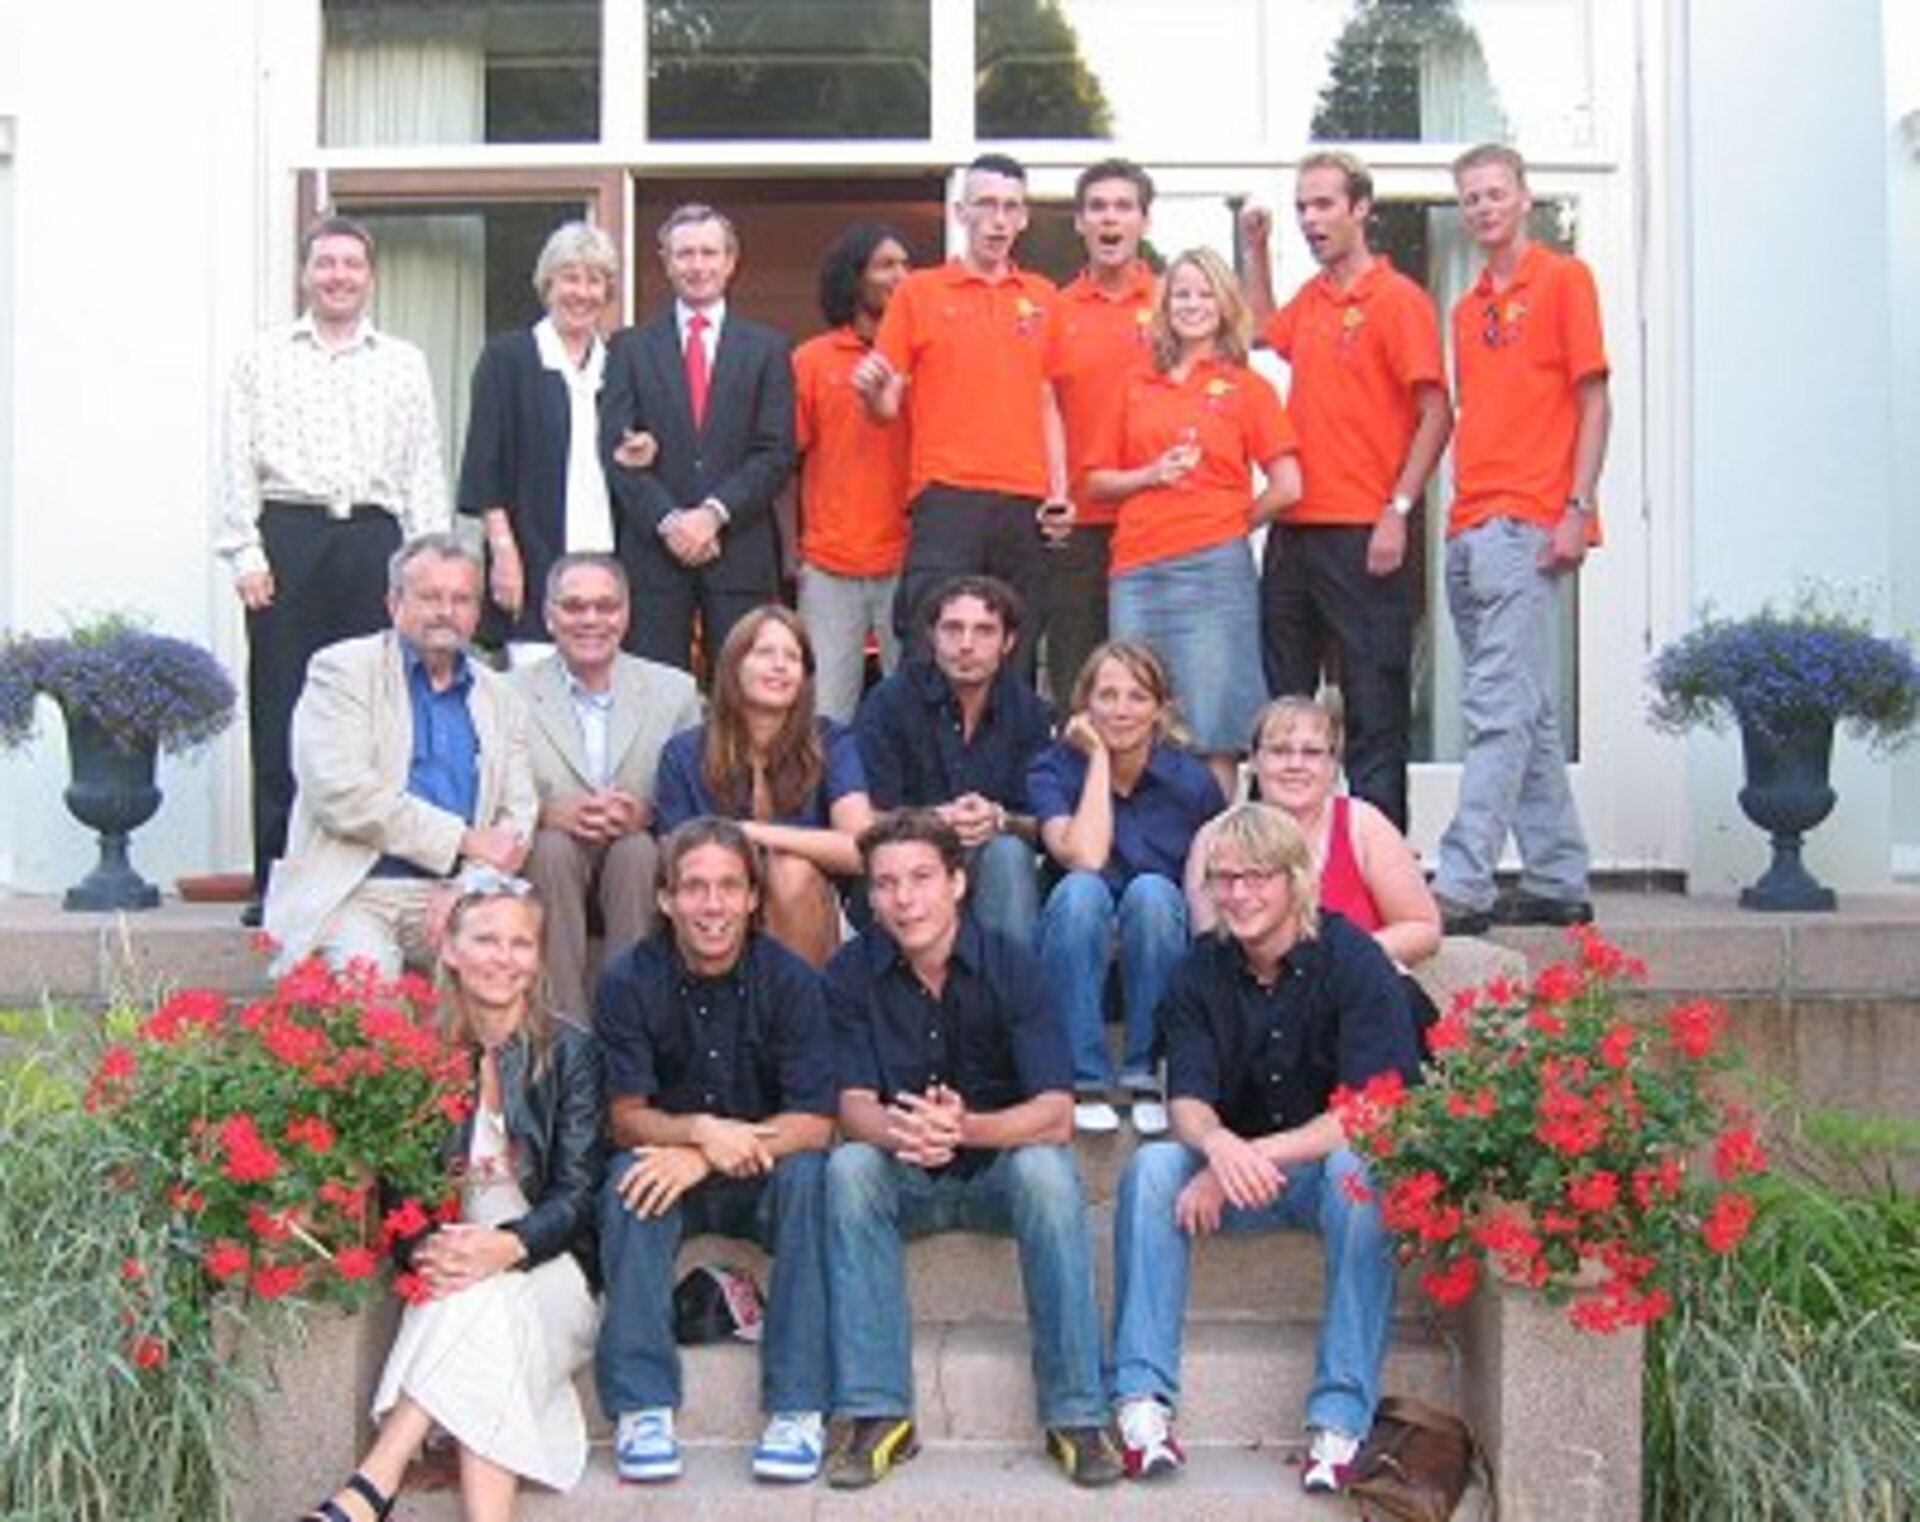 Nuna II gruppen på besøk i den nederlandske ambassadørens residens i Oslo